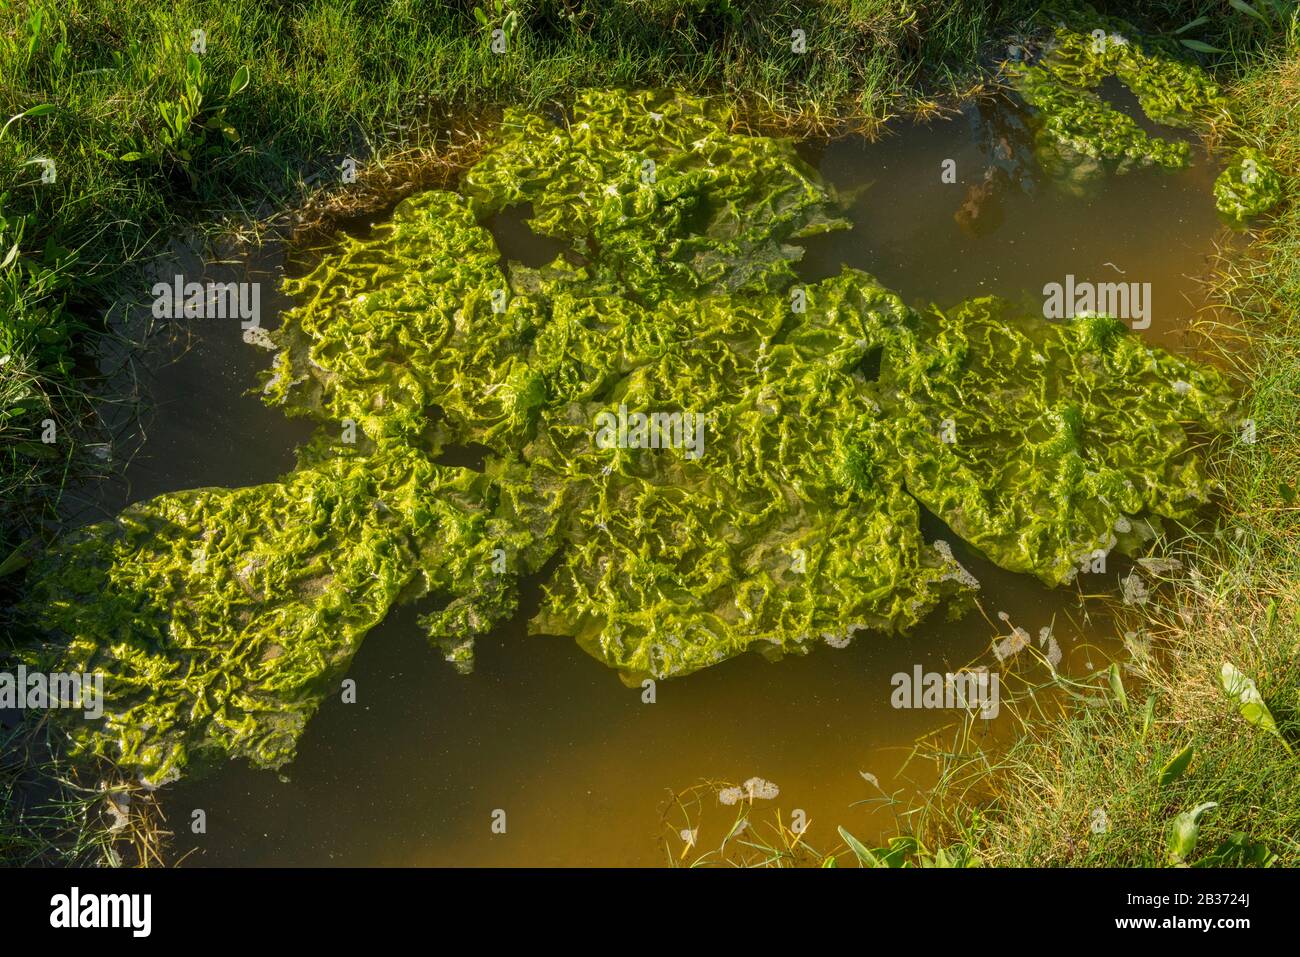 France, Somme (80), Baie de Somme, Saint-Valery-sur-Somme, Cap Hornu, Ulva lactuca, Sea lettuce, is a species of green seaweed Stock Photo